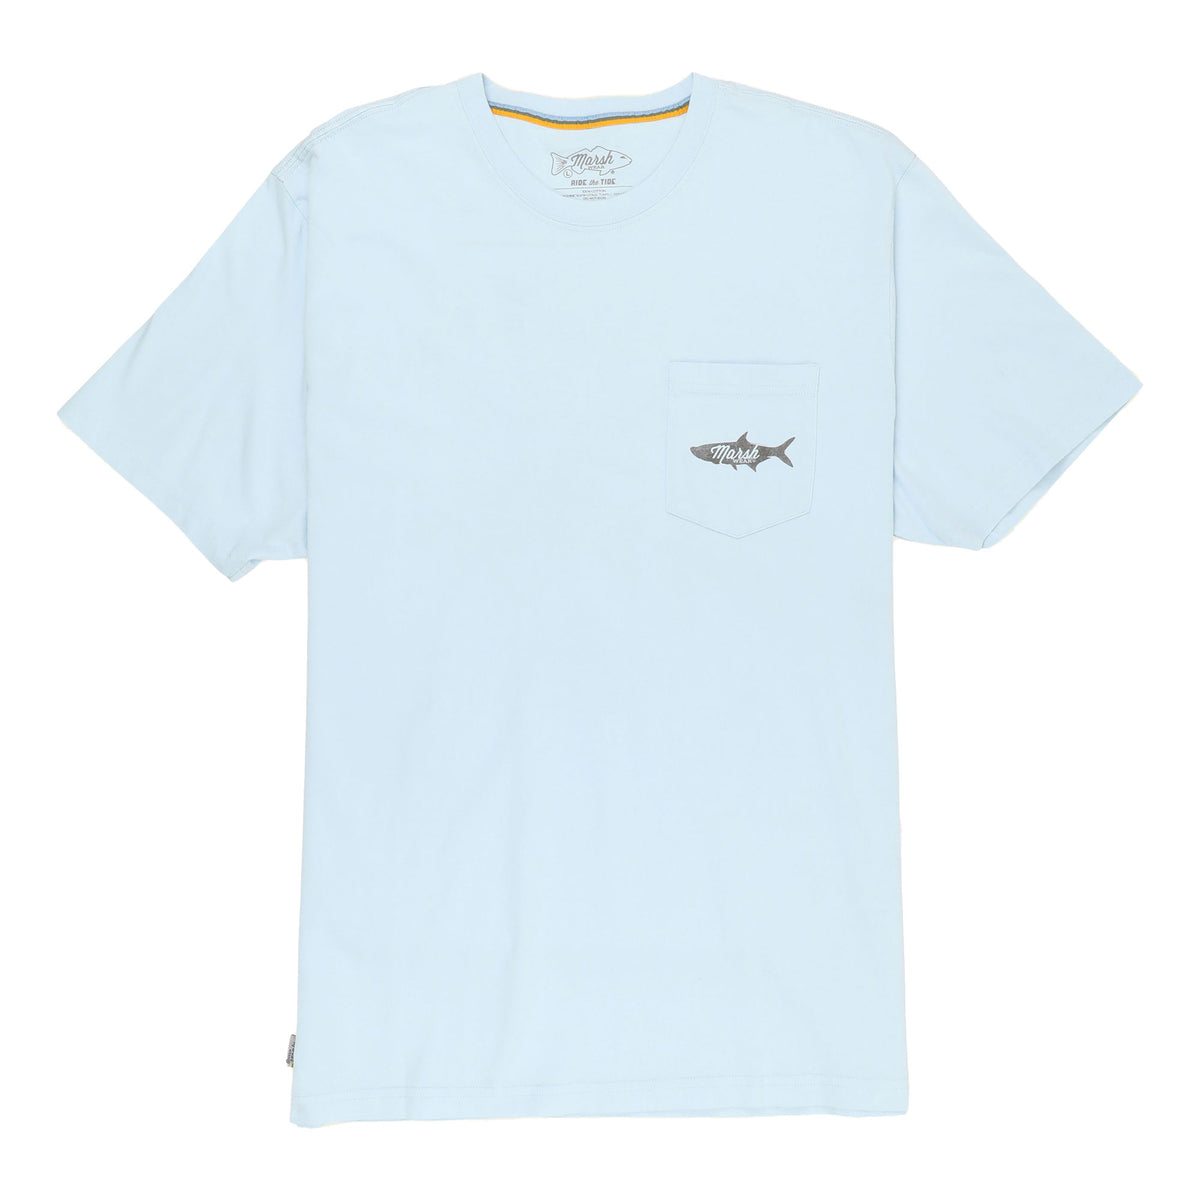 Marsh Wear Predator Short Sleeve T-Shirt